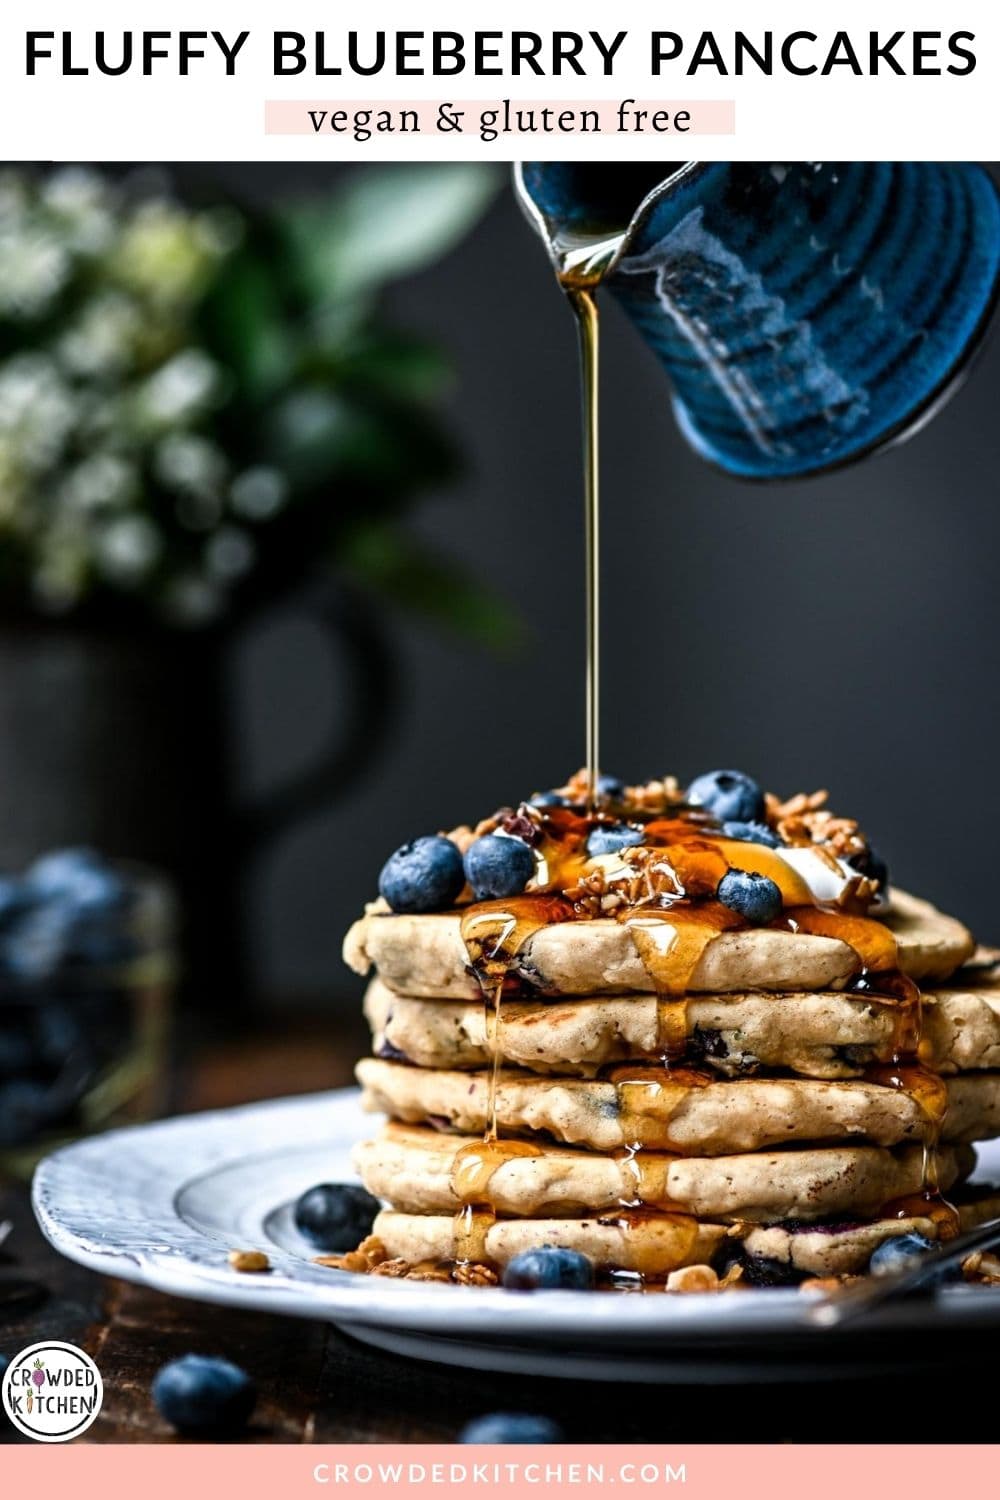 Gluten Free Vegan Blueberry Pancakes | Crowded Kitchen